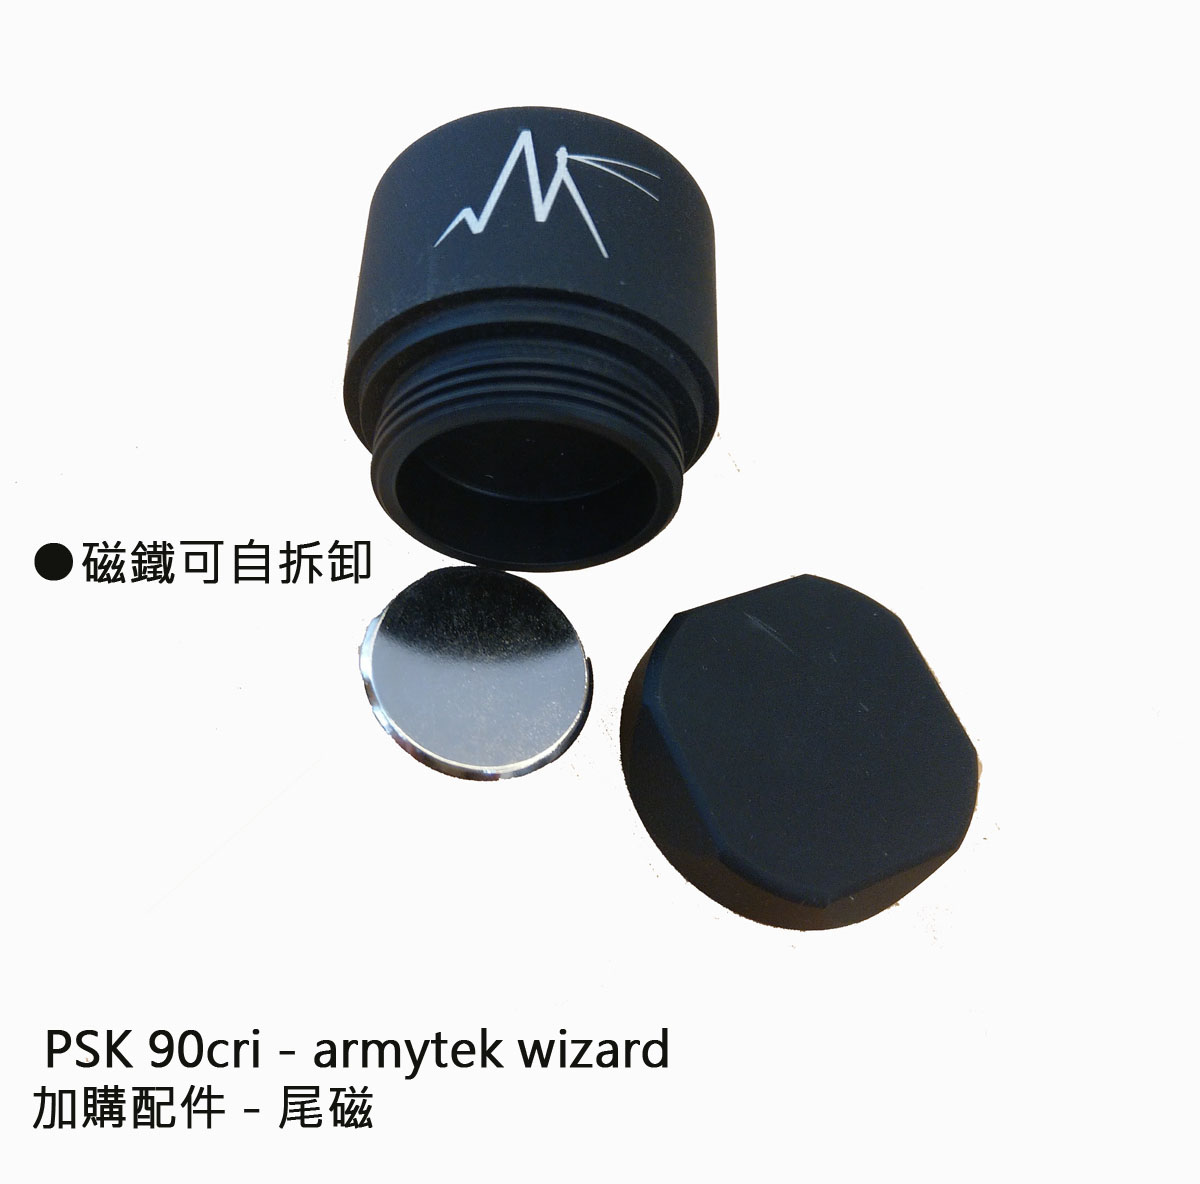 PSK 90cri尾磁加購 - armytek wizard